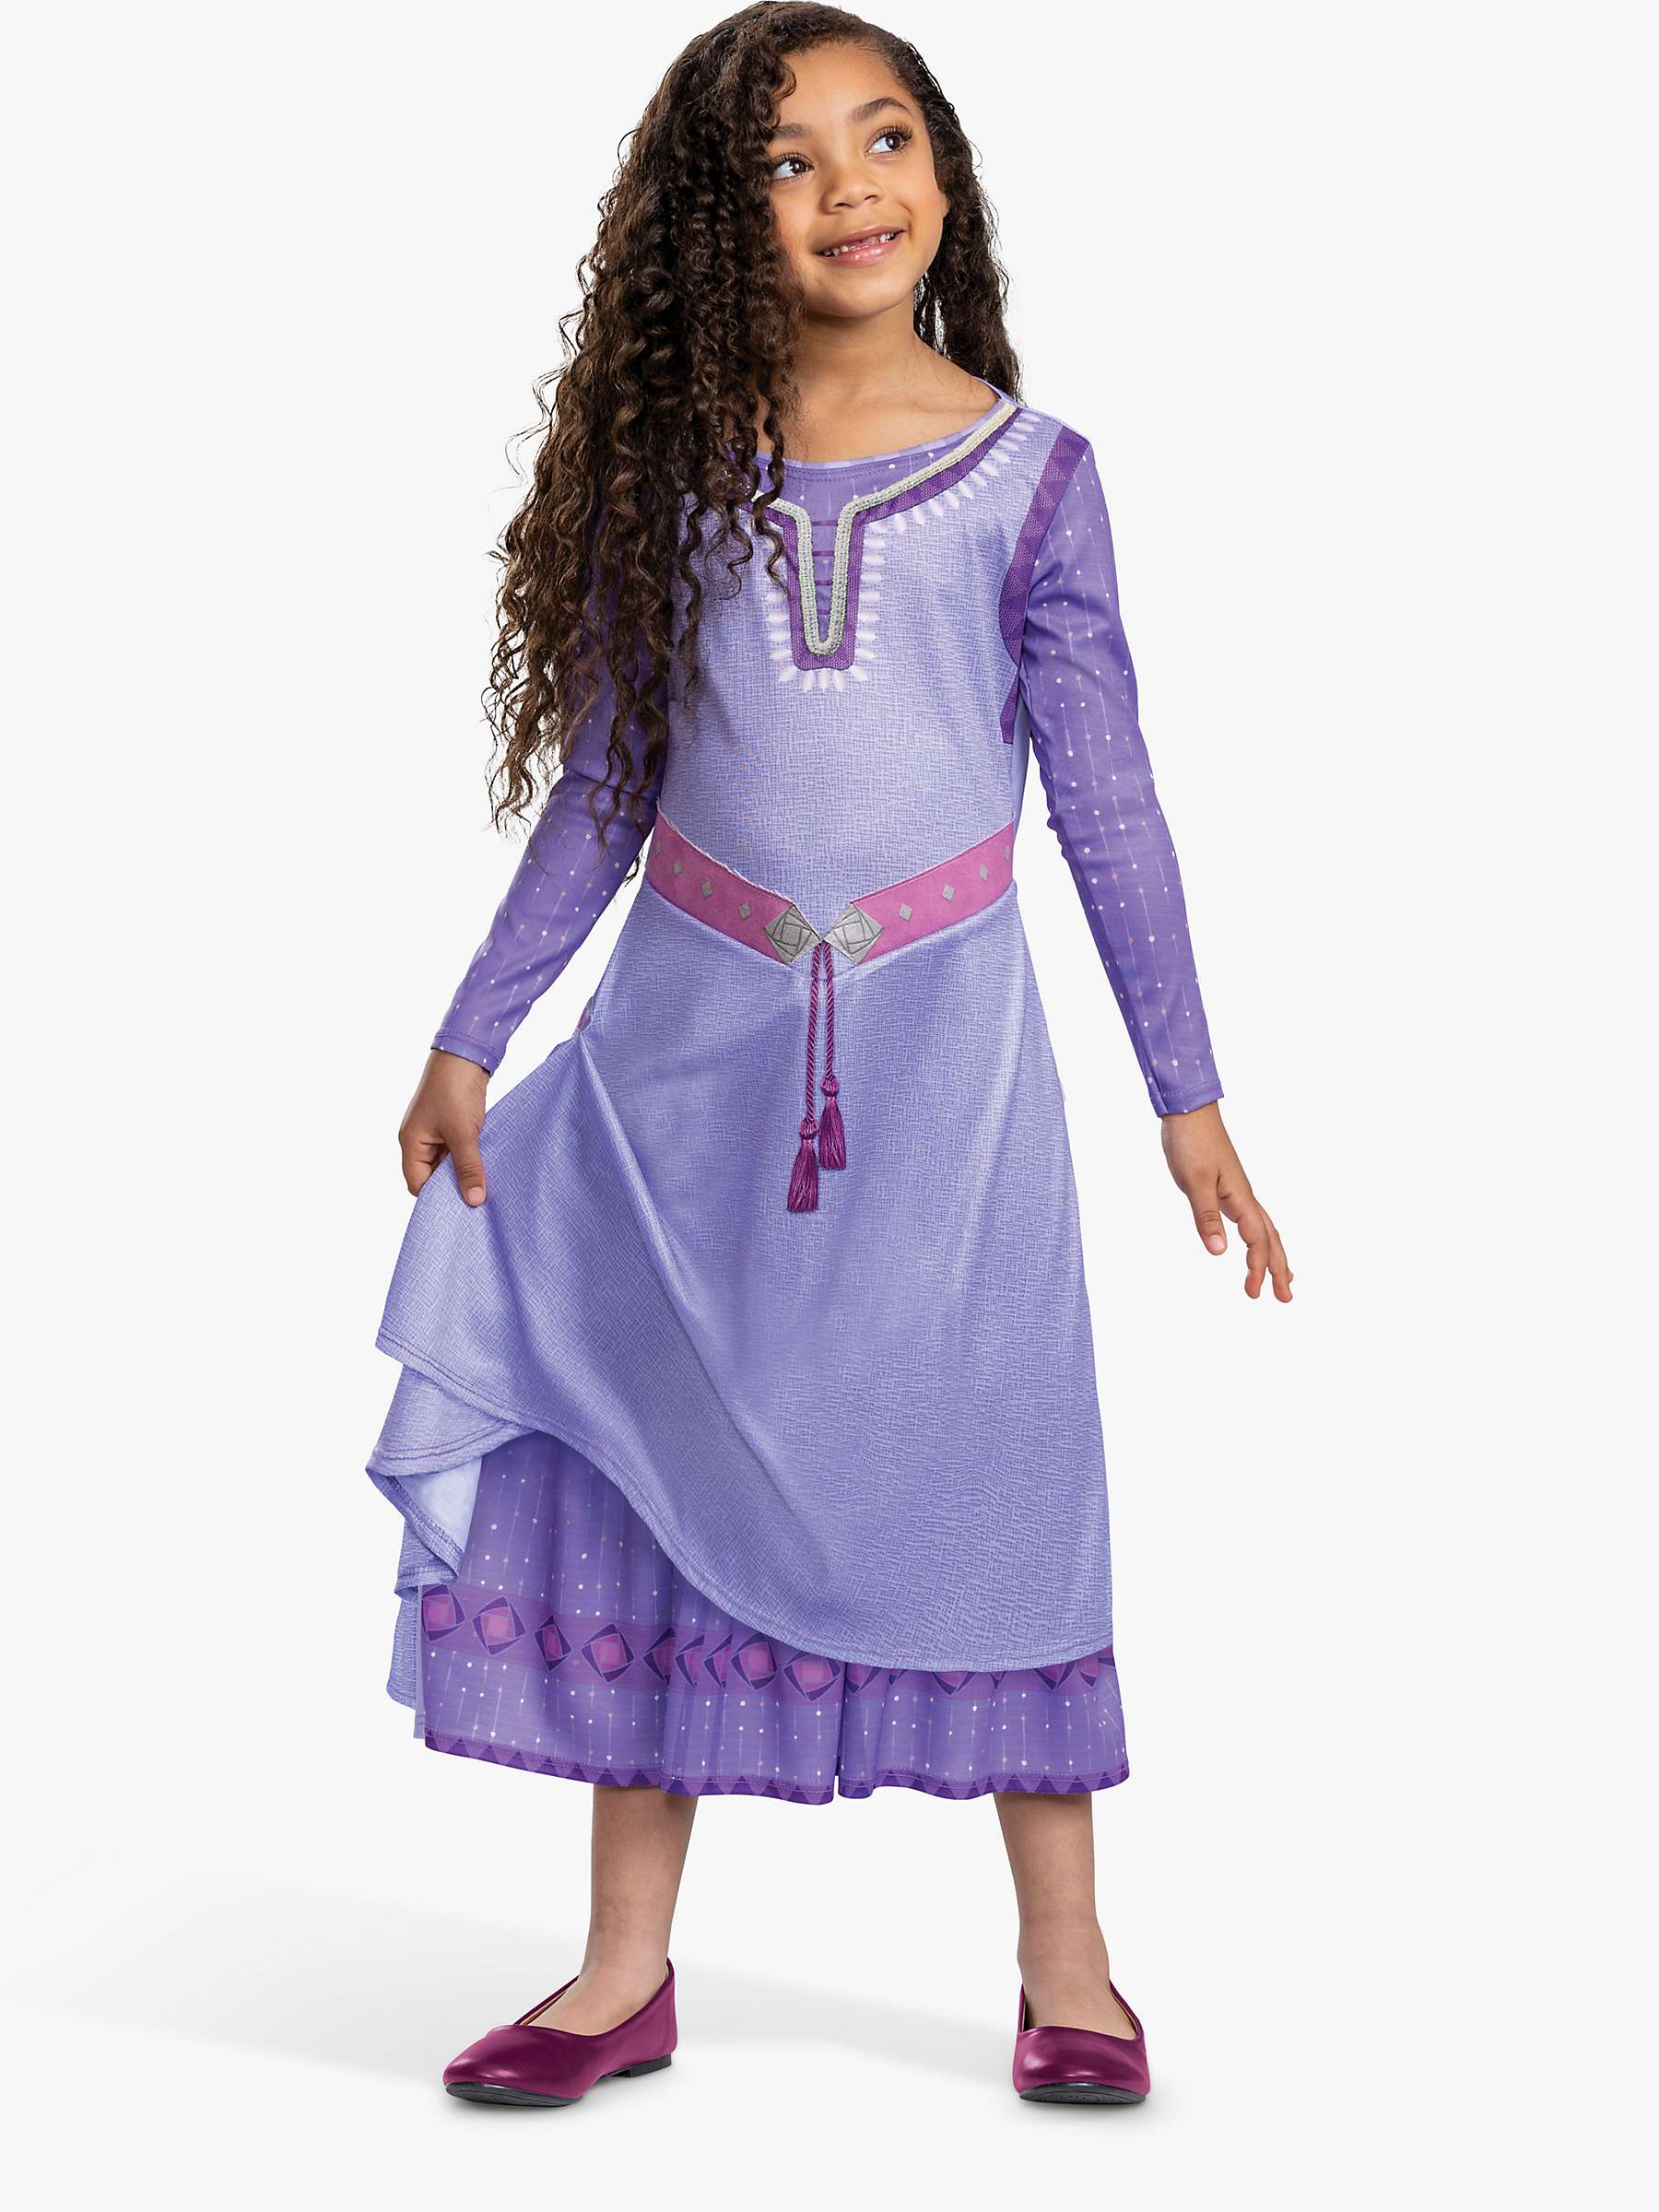 Buy Disney Princess Wish Asha Deluxe Children's Costume Online at johnlewis.com